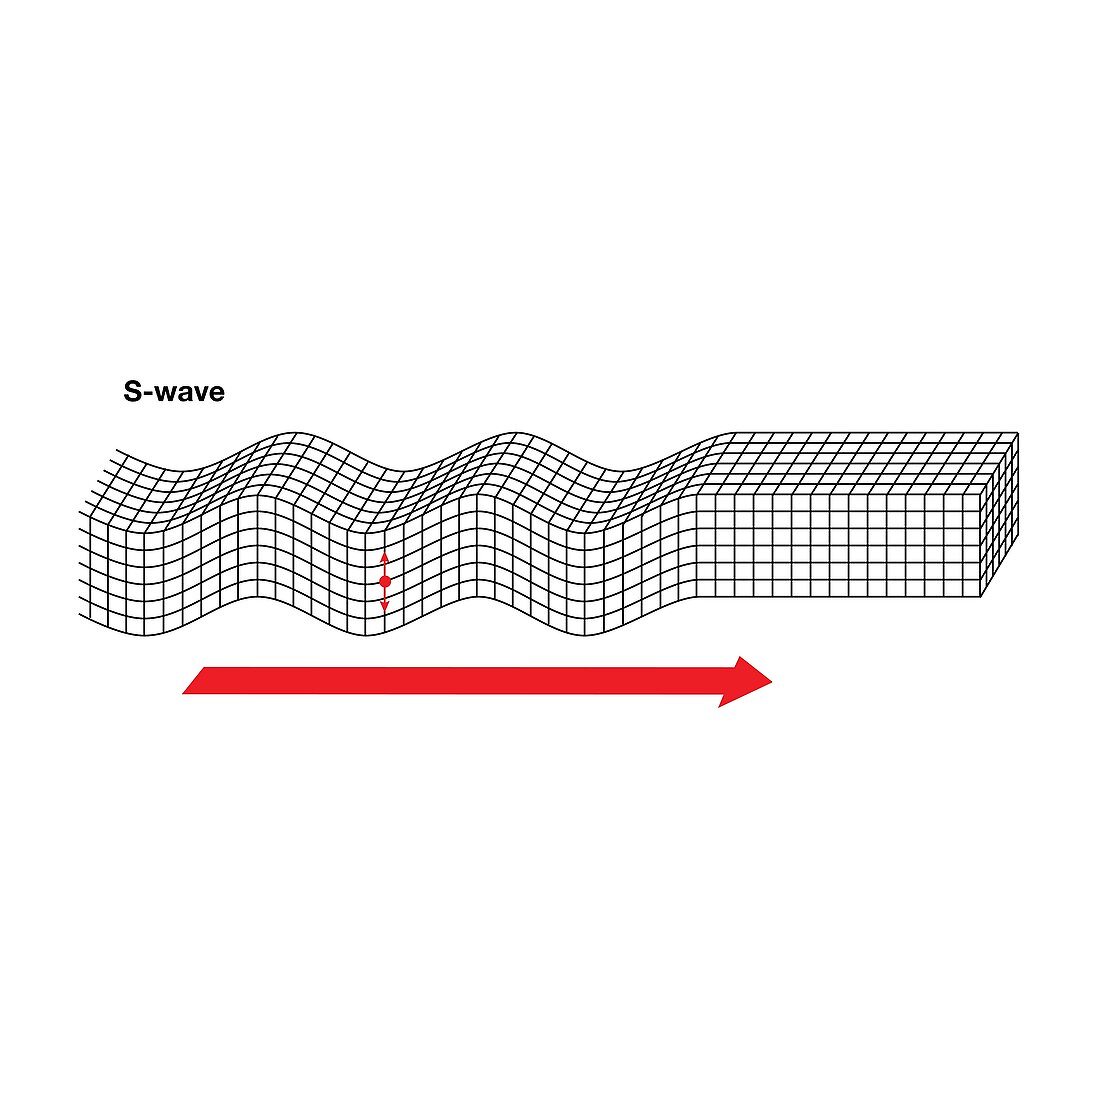 Seismic S-wave propagation, illustration